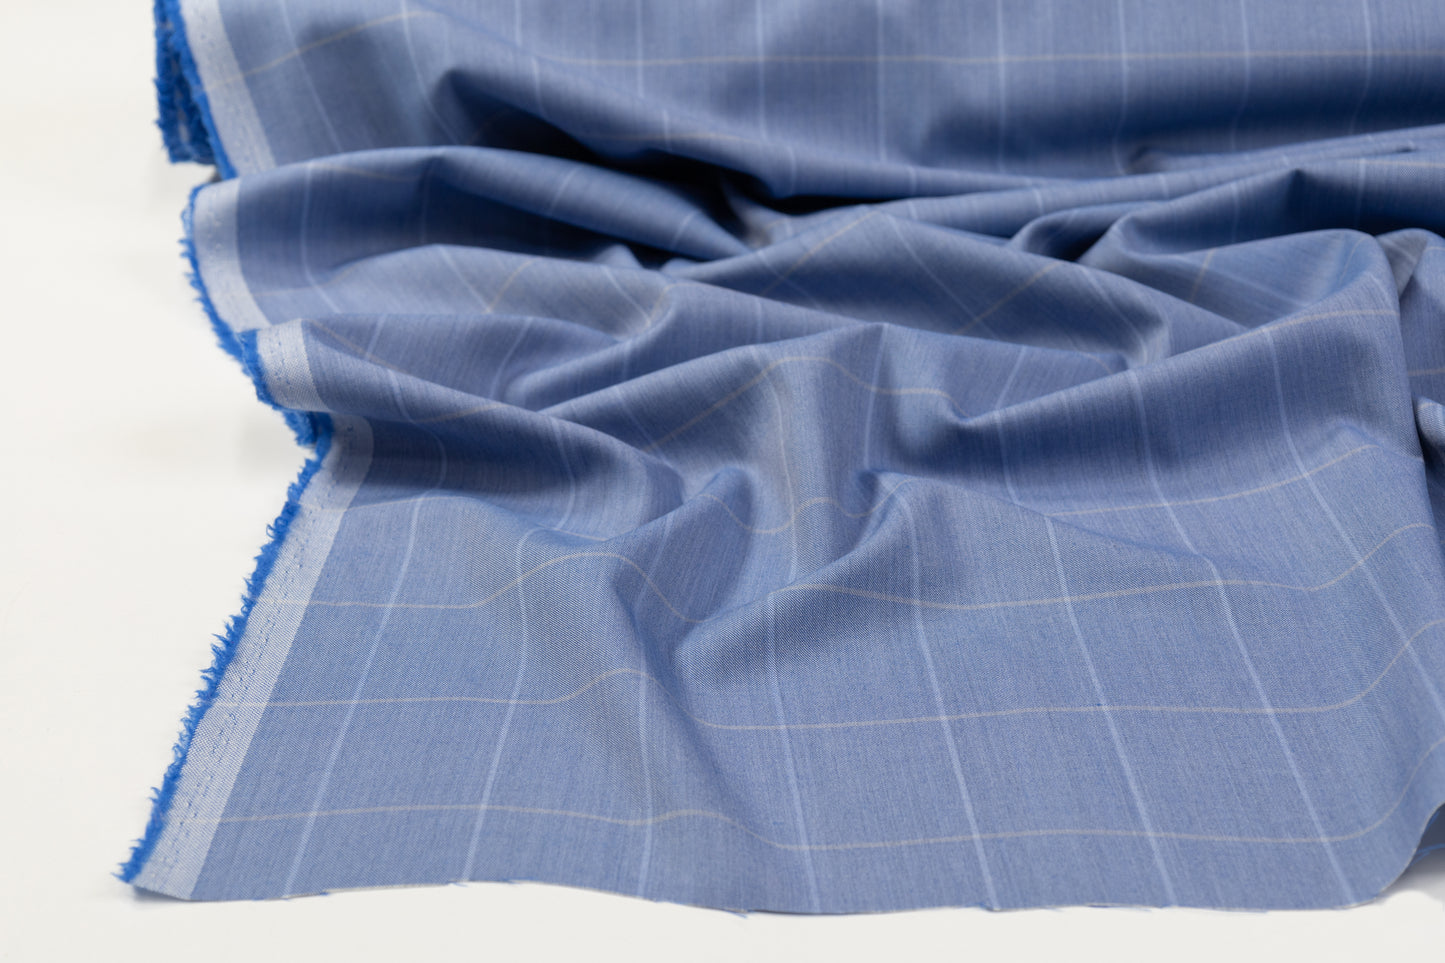 Windowpane Italian Wool Suiting - Blue